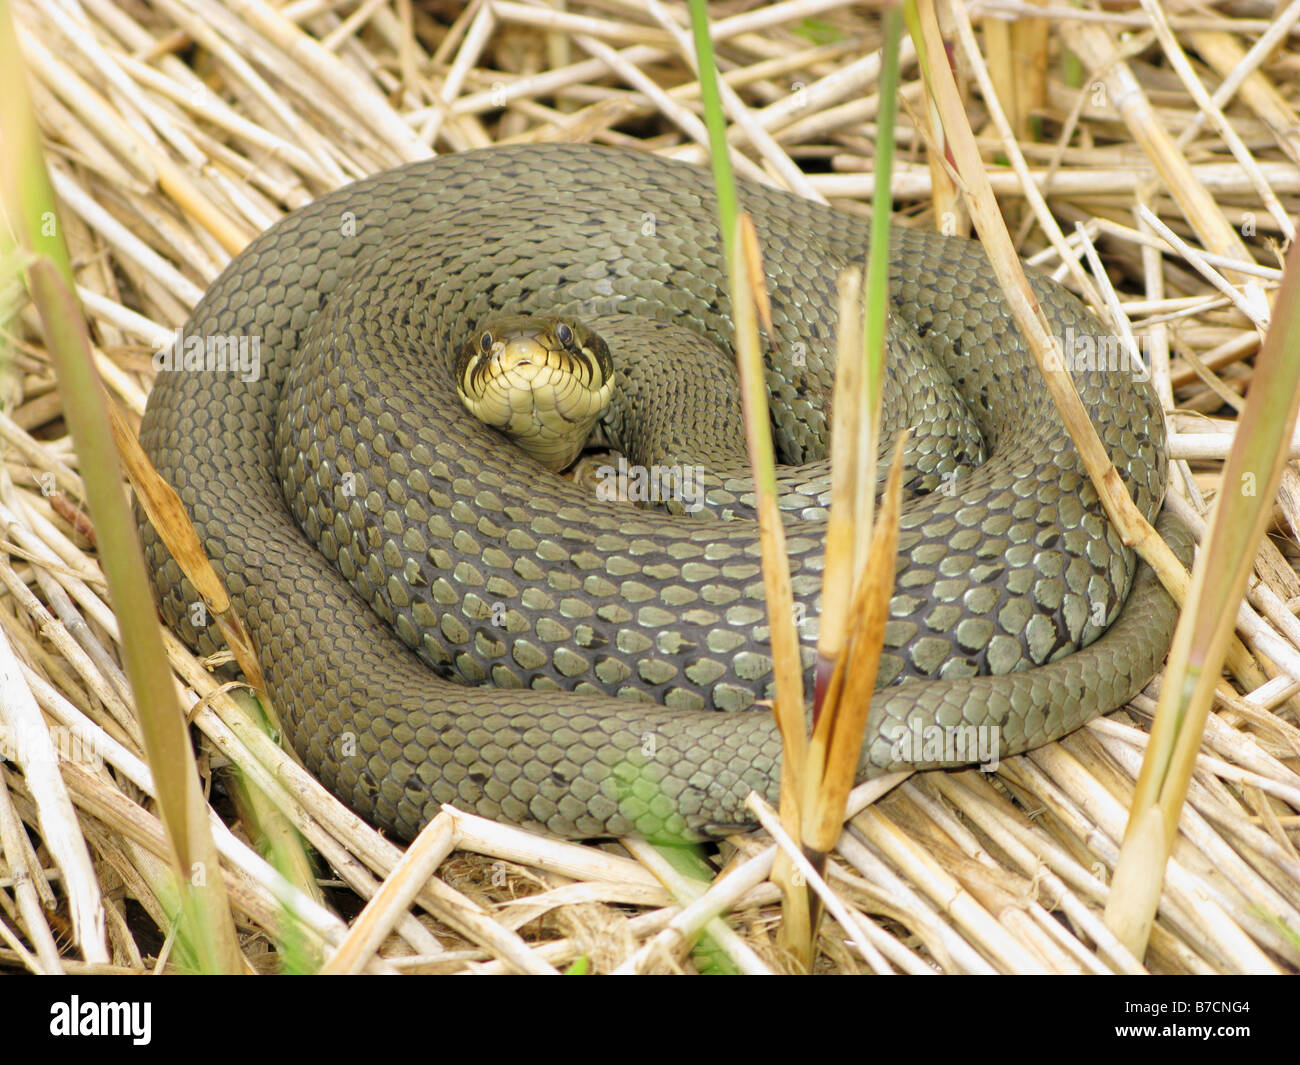 https://c8.alamy.com/comp/B7CNG4/grass-snake-natrix-natrix-sunbathing-on-dry-reed-germany-bavaria-isental-B7CNG4.jpg